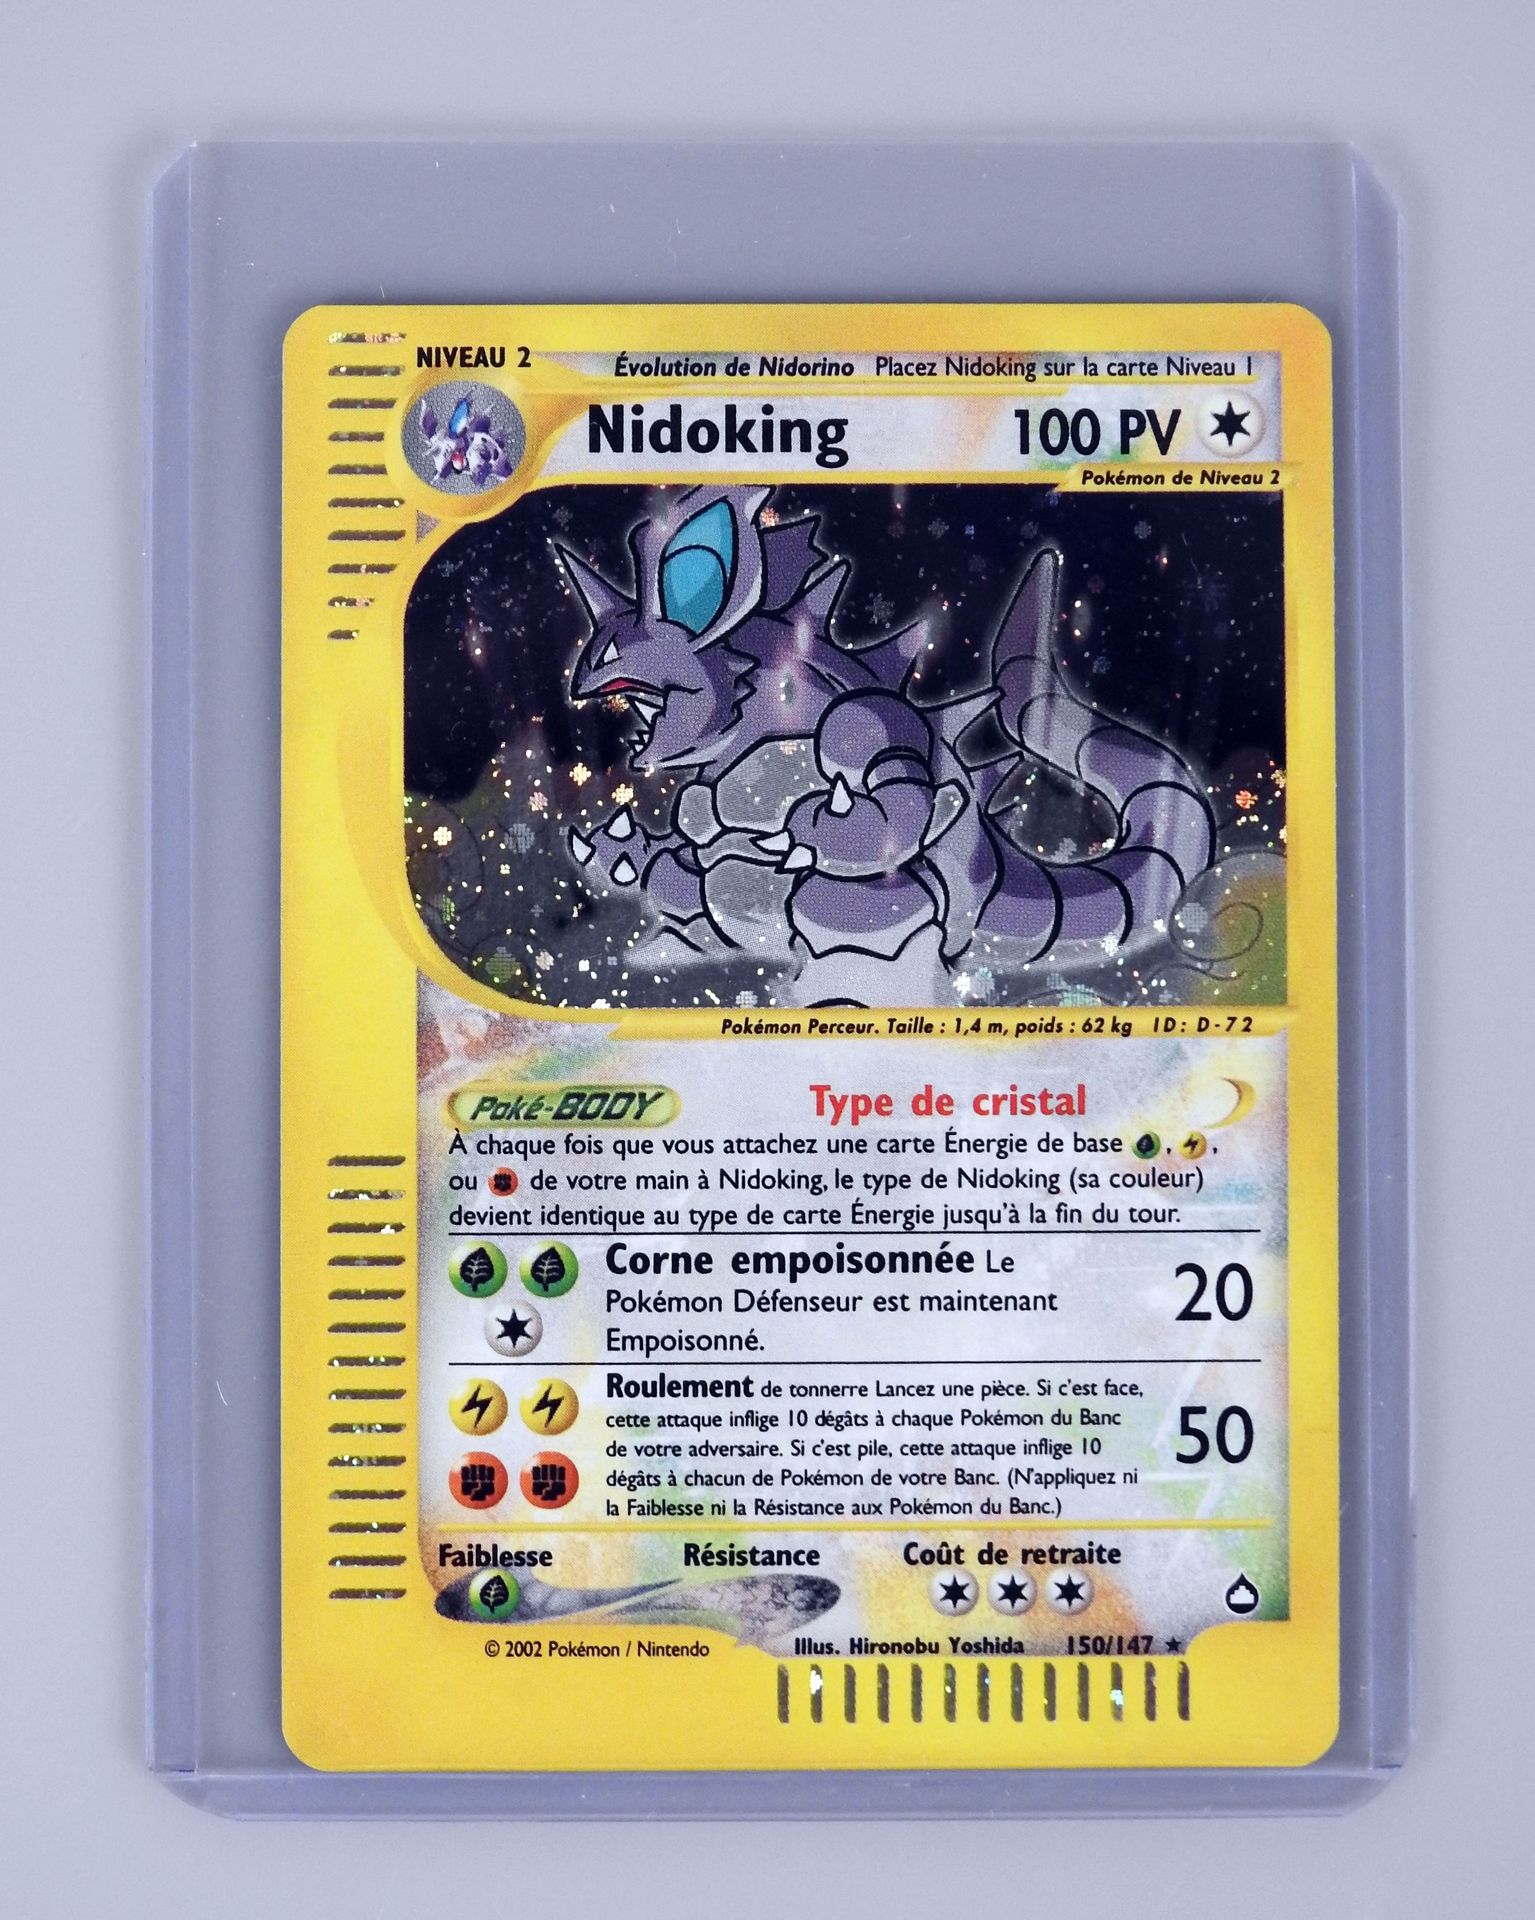 Null NIDOKING

Maghi Aquapolis blocco 150/147

Scheda Pokémon in ottime condizio&hellip;